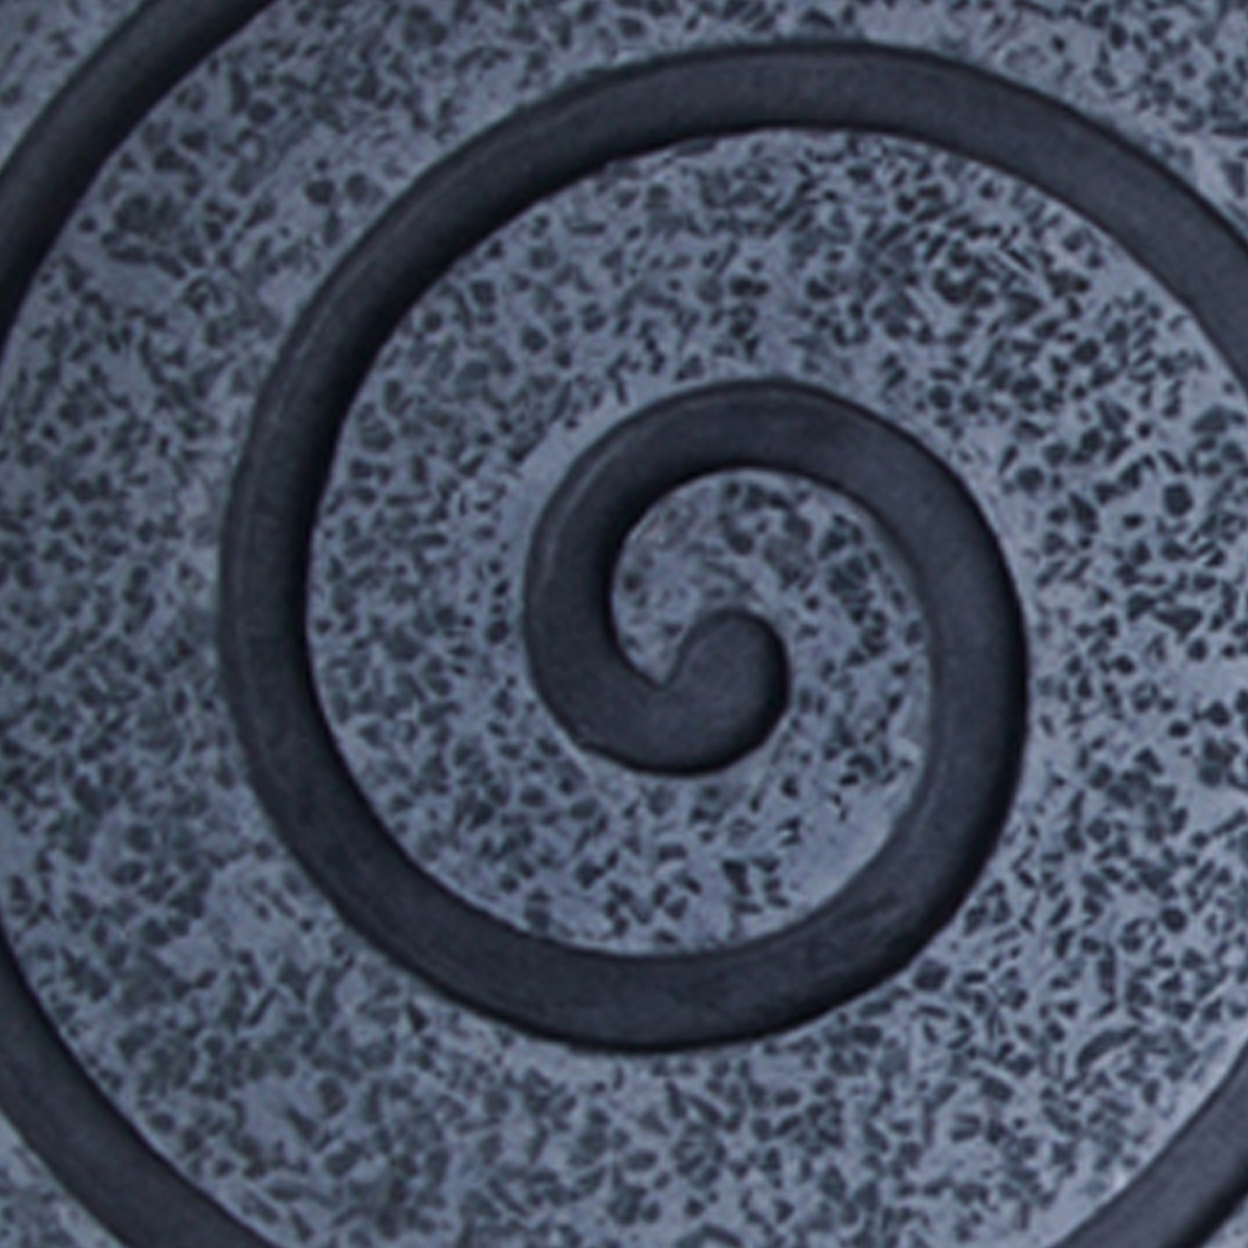 Round Sandstone And Glass Wall Decor With Spiral Design, Medium, Gray- Saltoro Sherpi